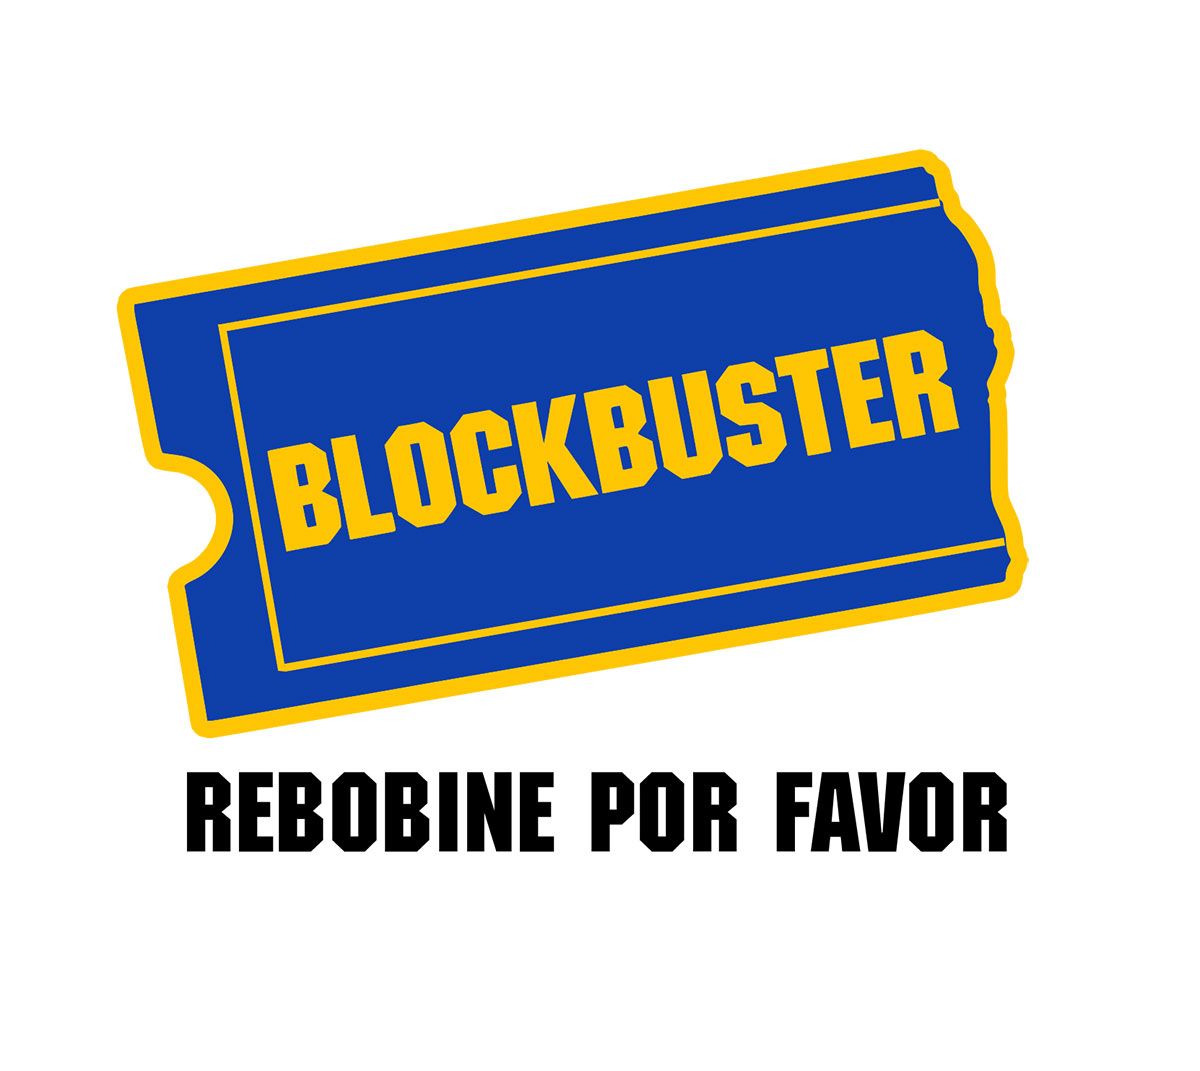 Nome do produto: Blockbuster